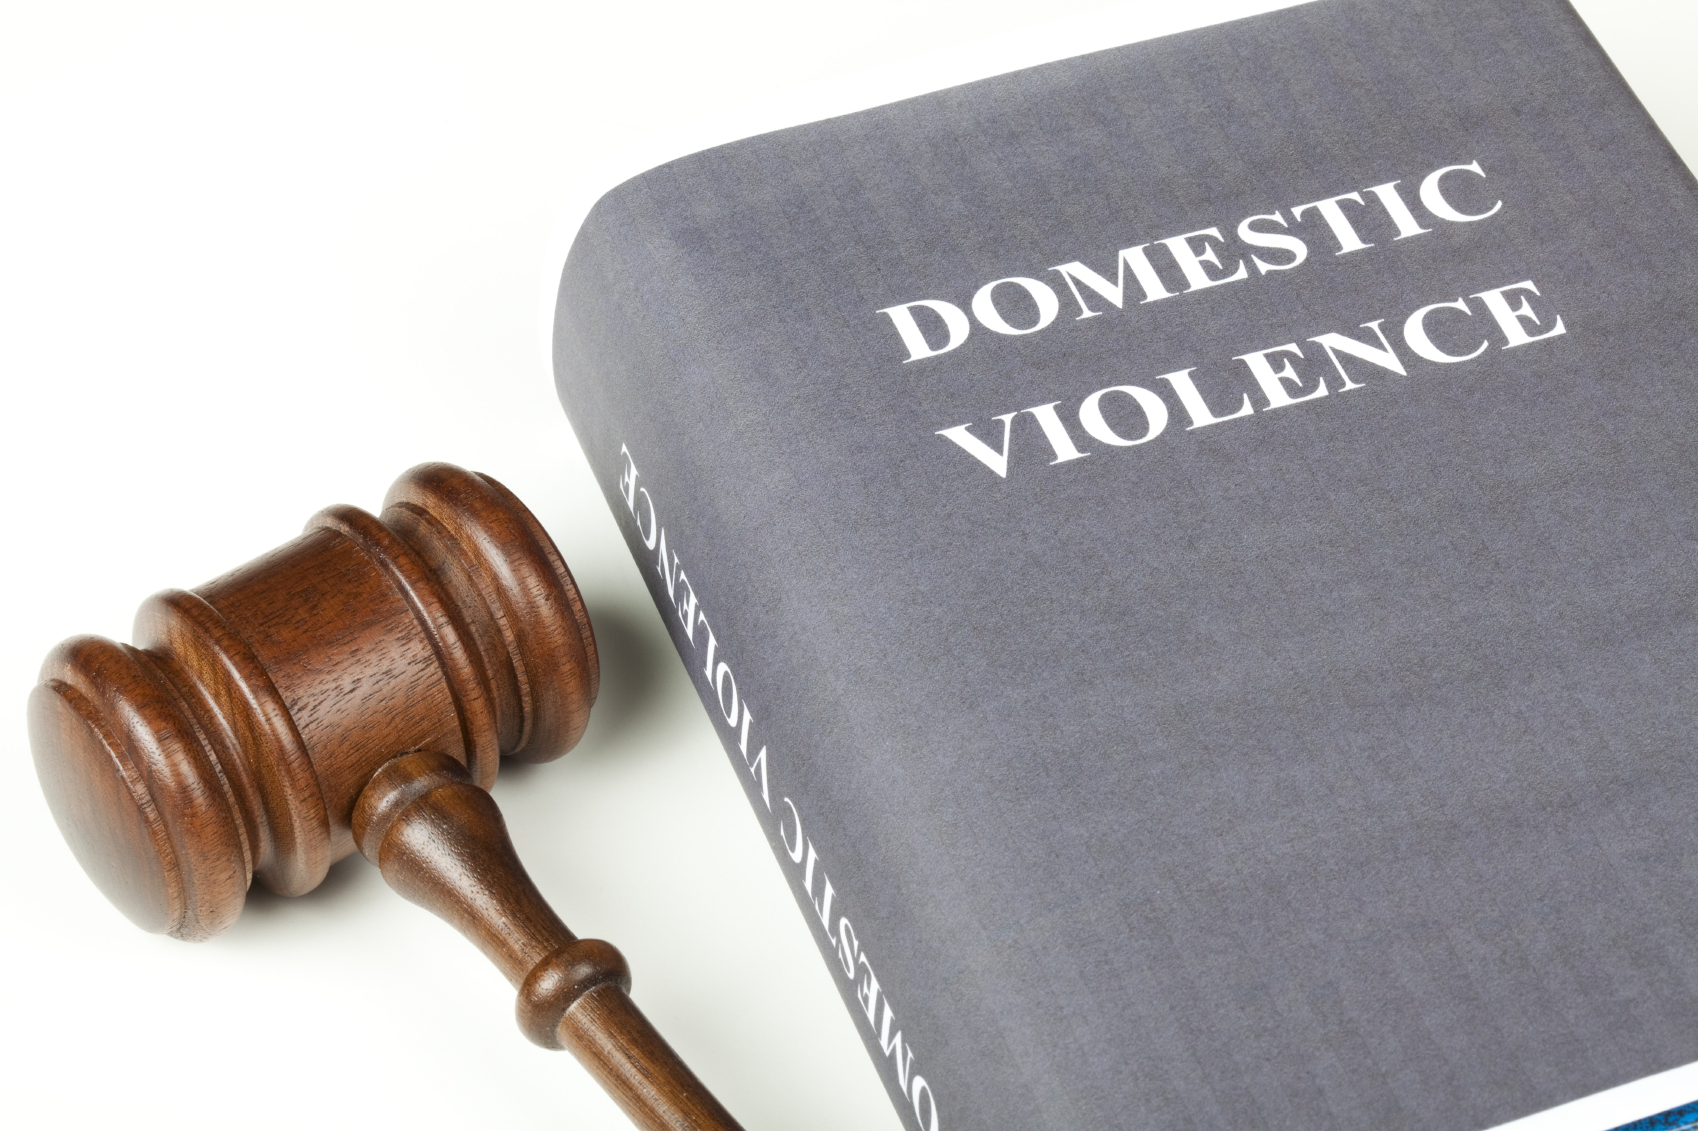 DOJ Highlights W.Va. Domestic Violence Advocacy Organizations